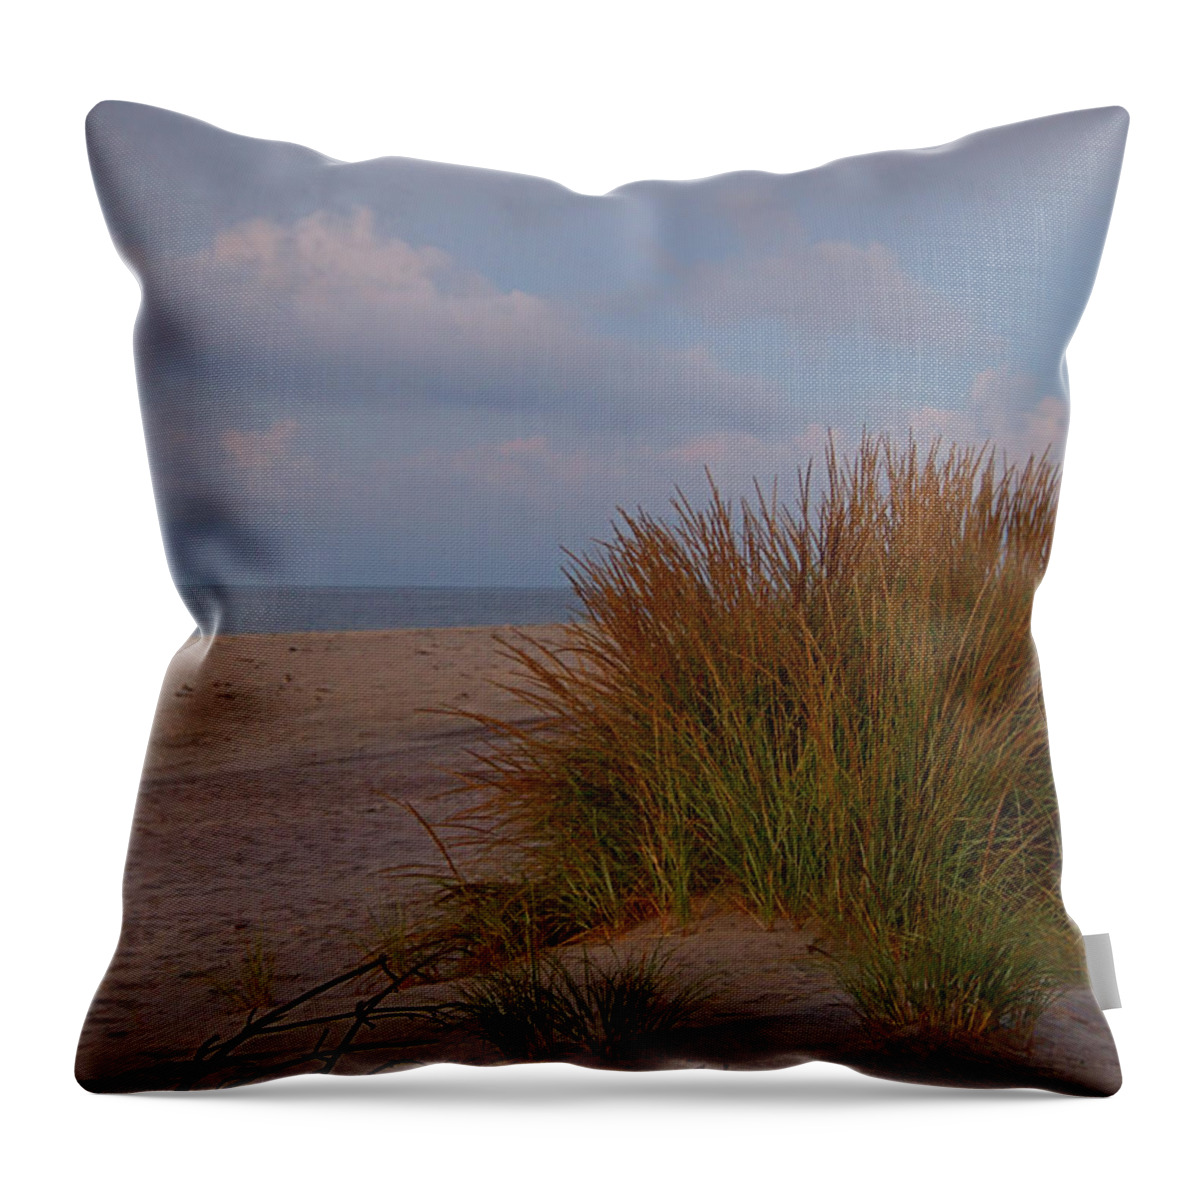 Beach Throw Pillow featuring the photograph Beach Grass I I I by Newwwman